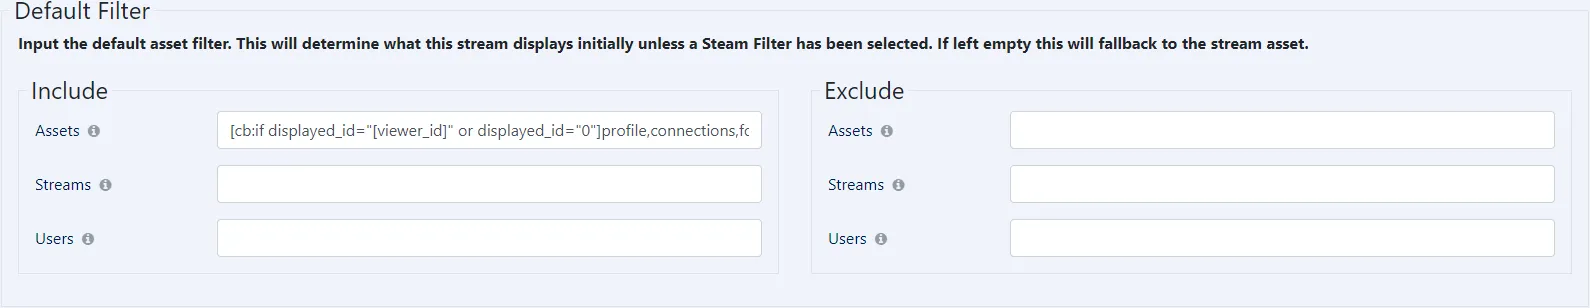 default stream filter management